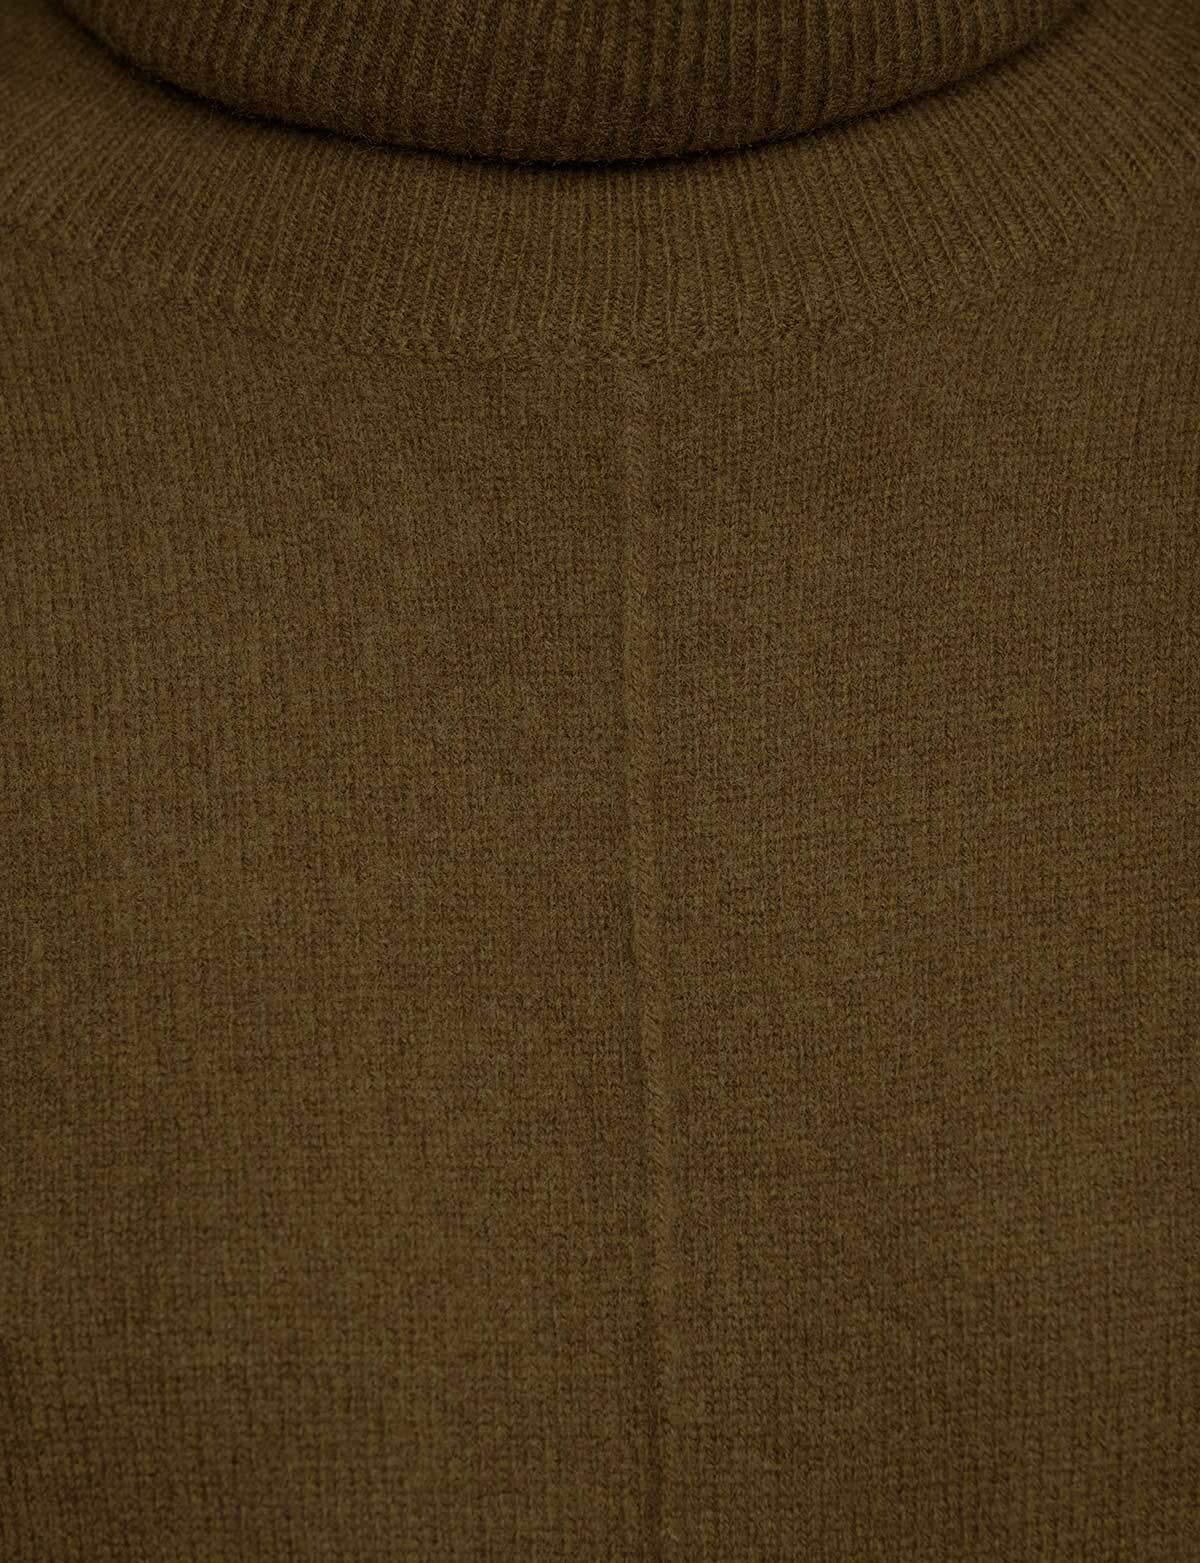 Slit Long Sweater in Saddle Brown-BESTSELLER